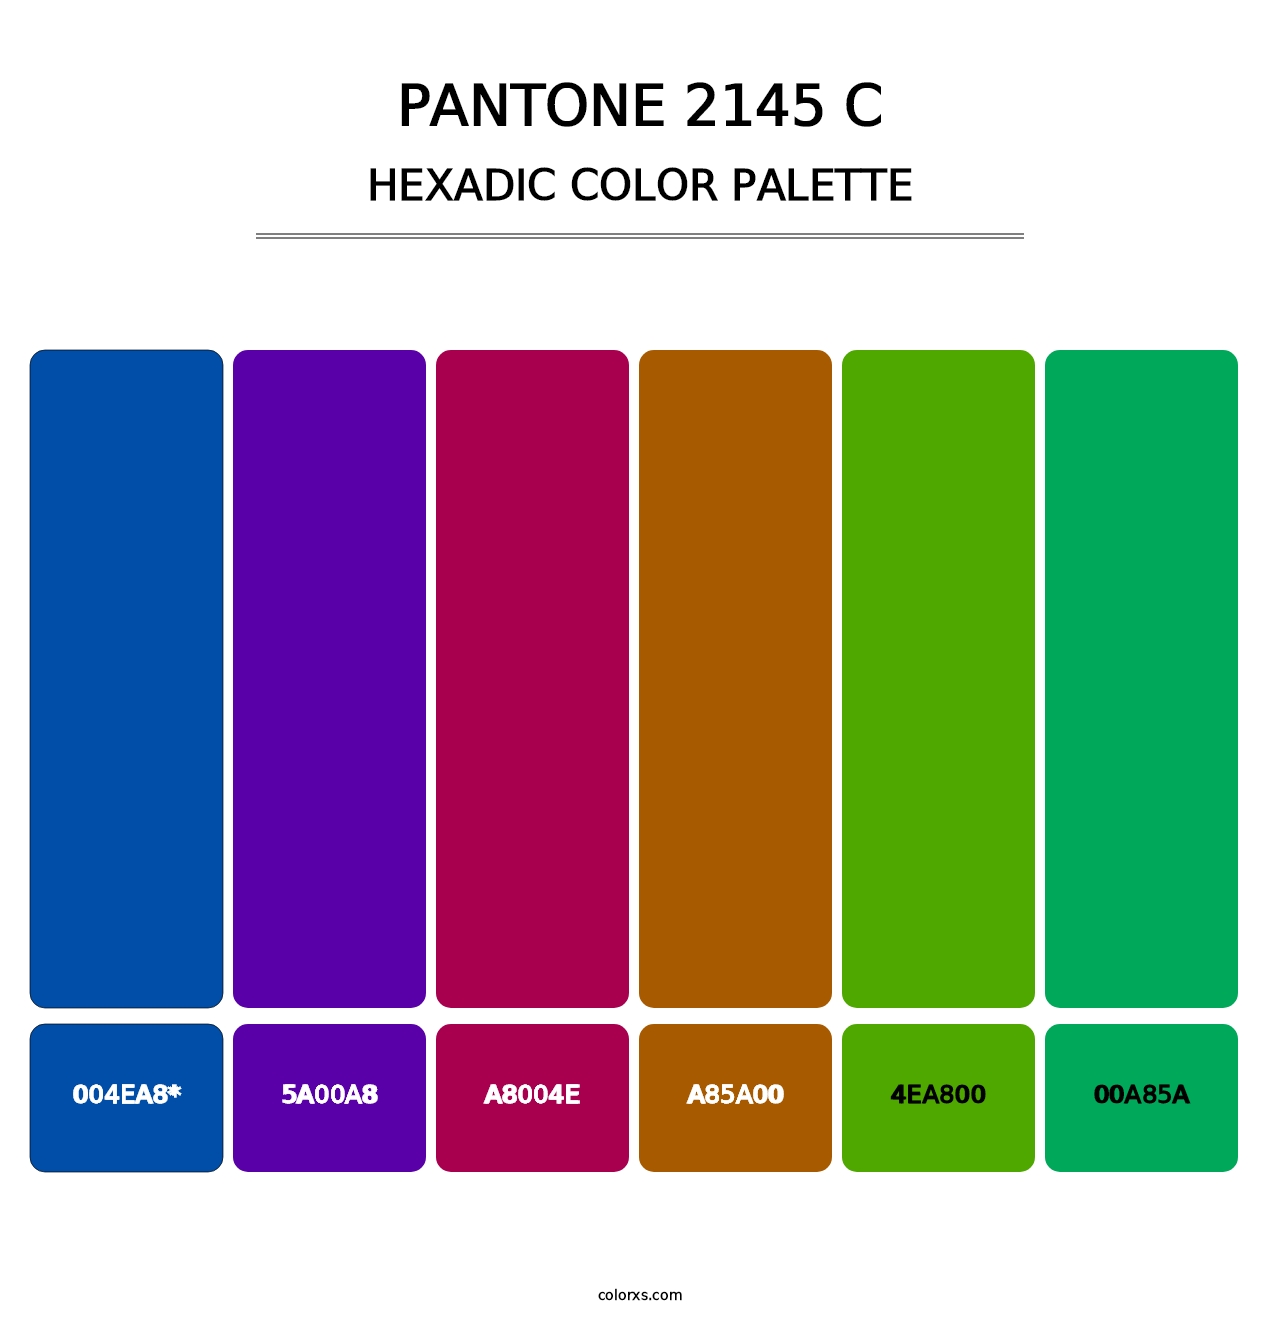 PANTONE 2145 C - Hexadic Color Palette